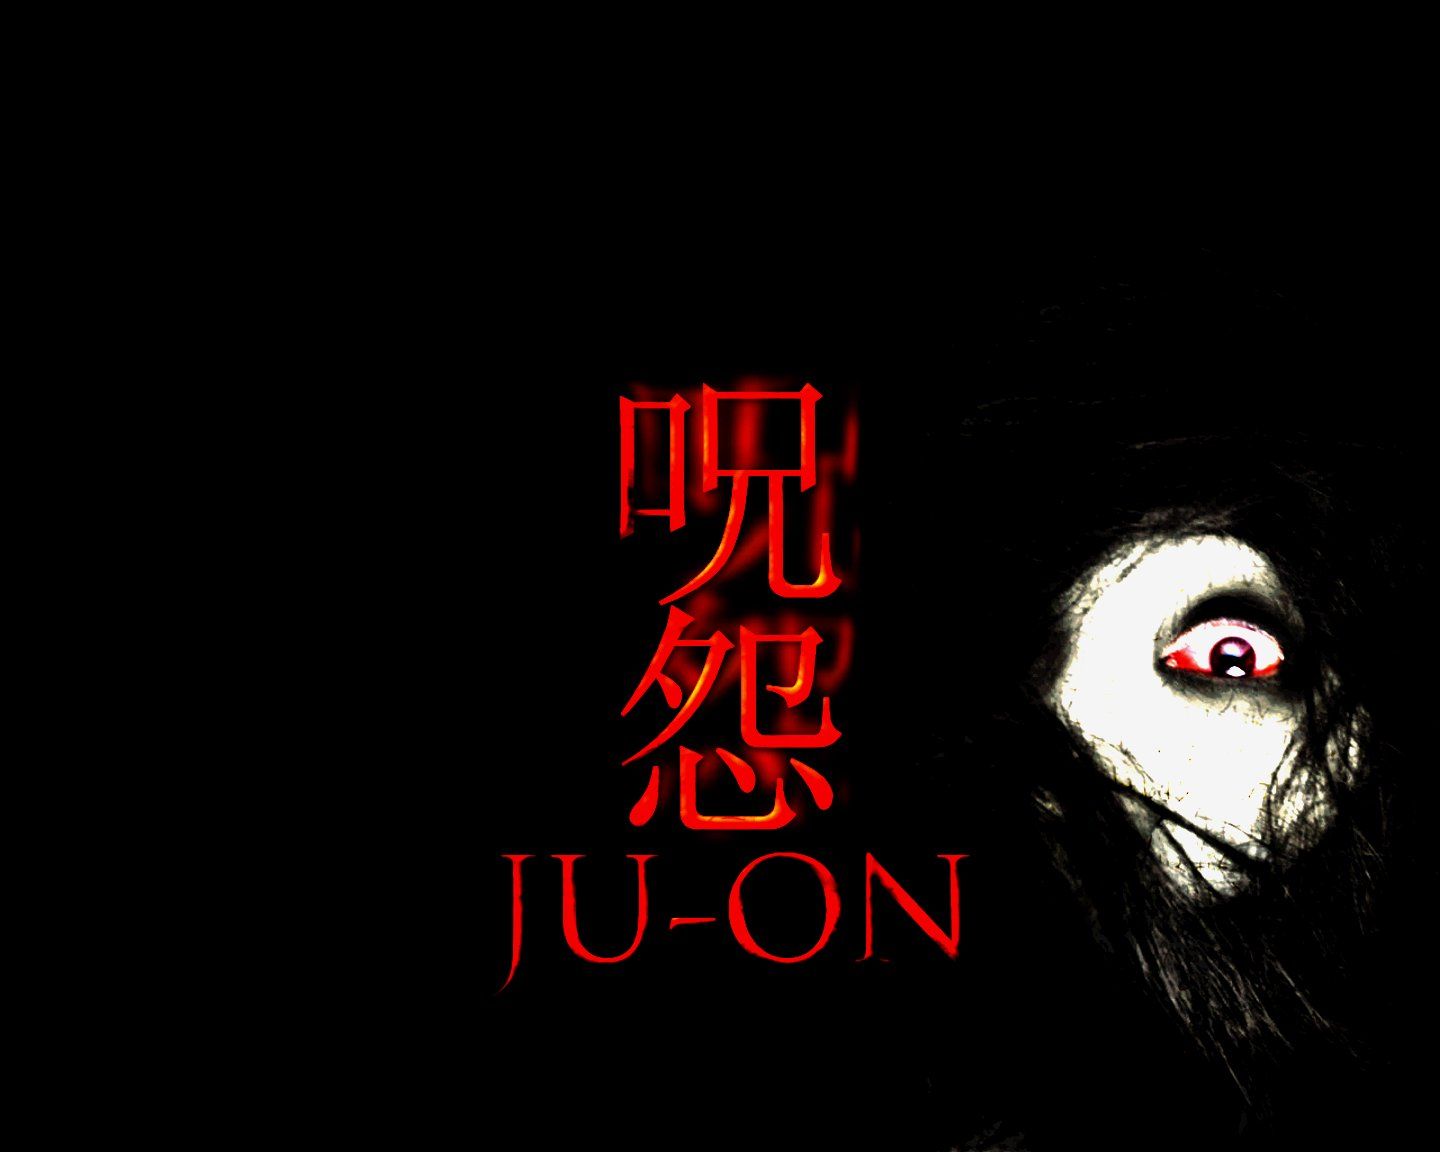 THE GRUDGE horror mystery thriller dark movie film the-grudge ju ...